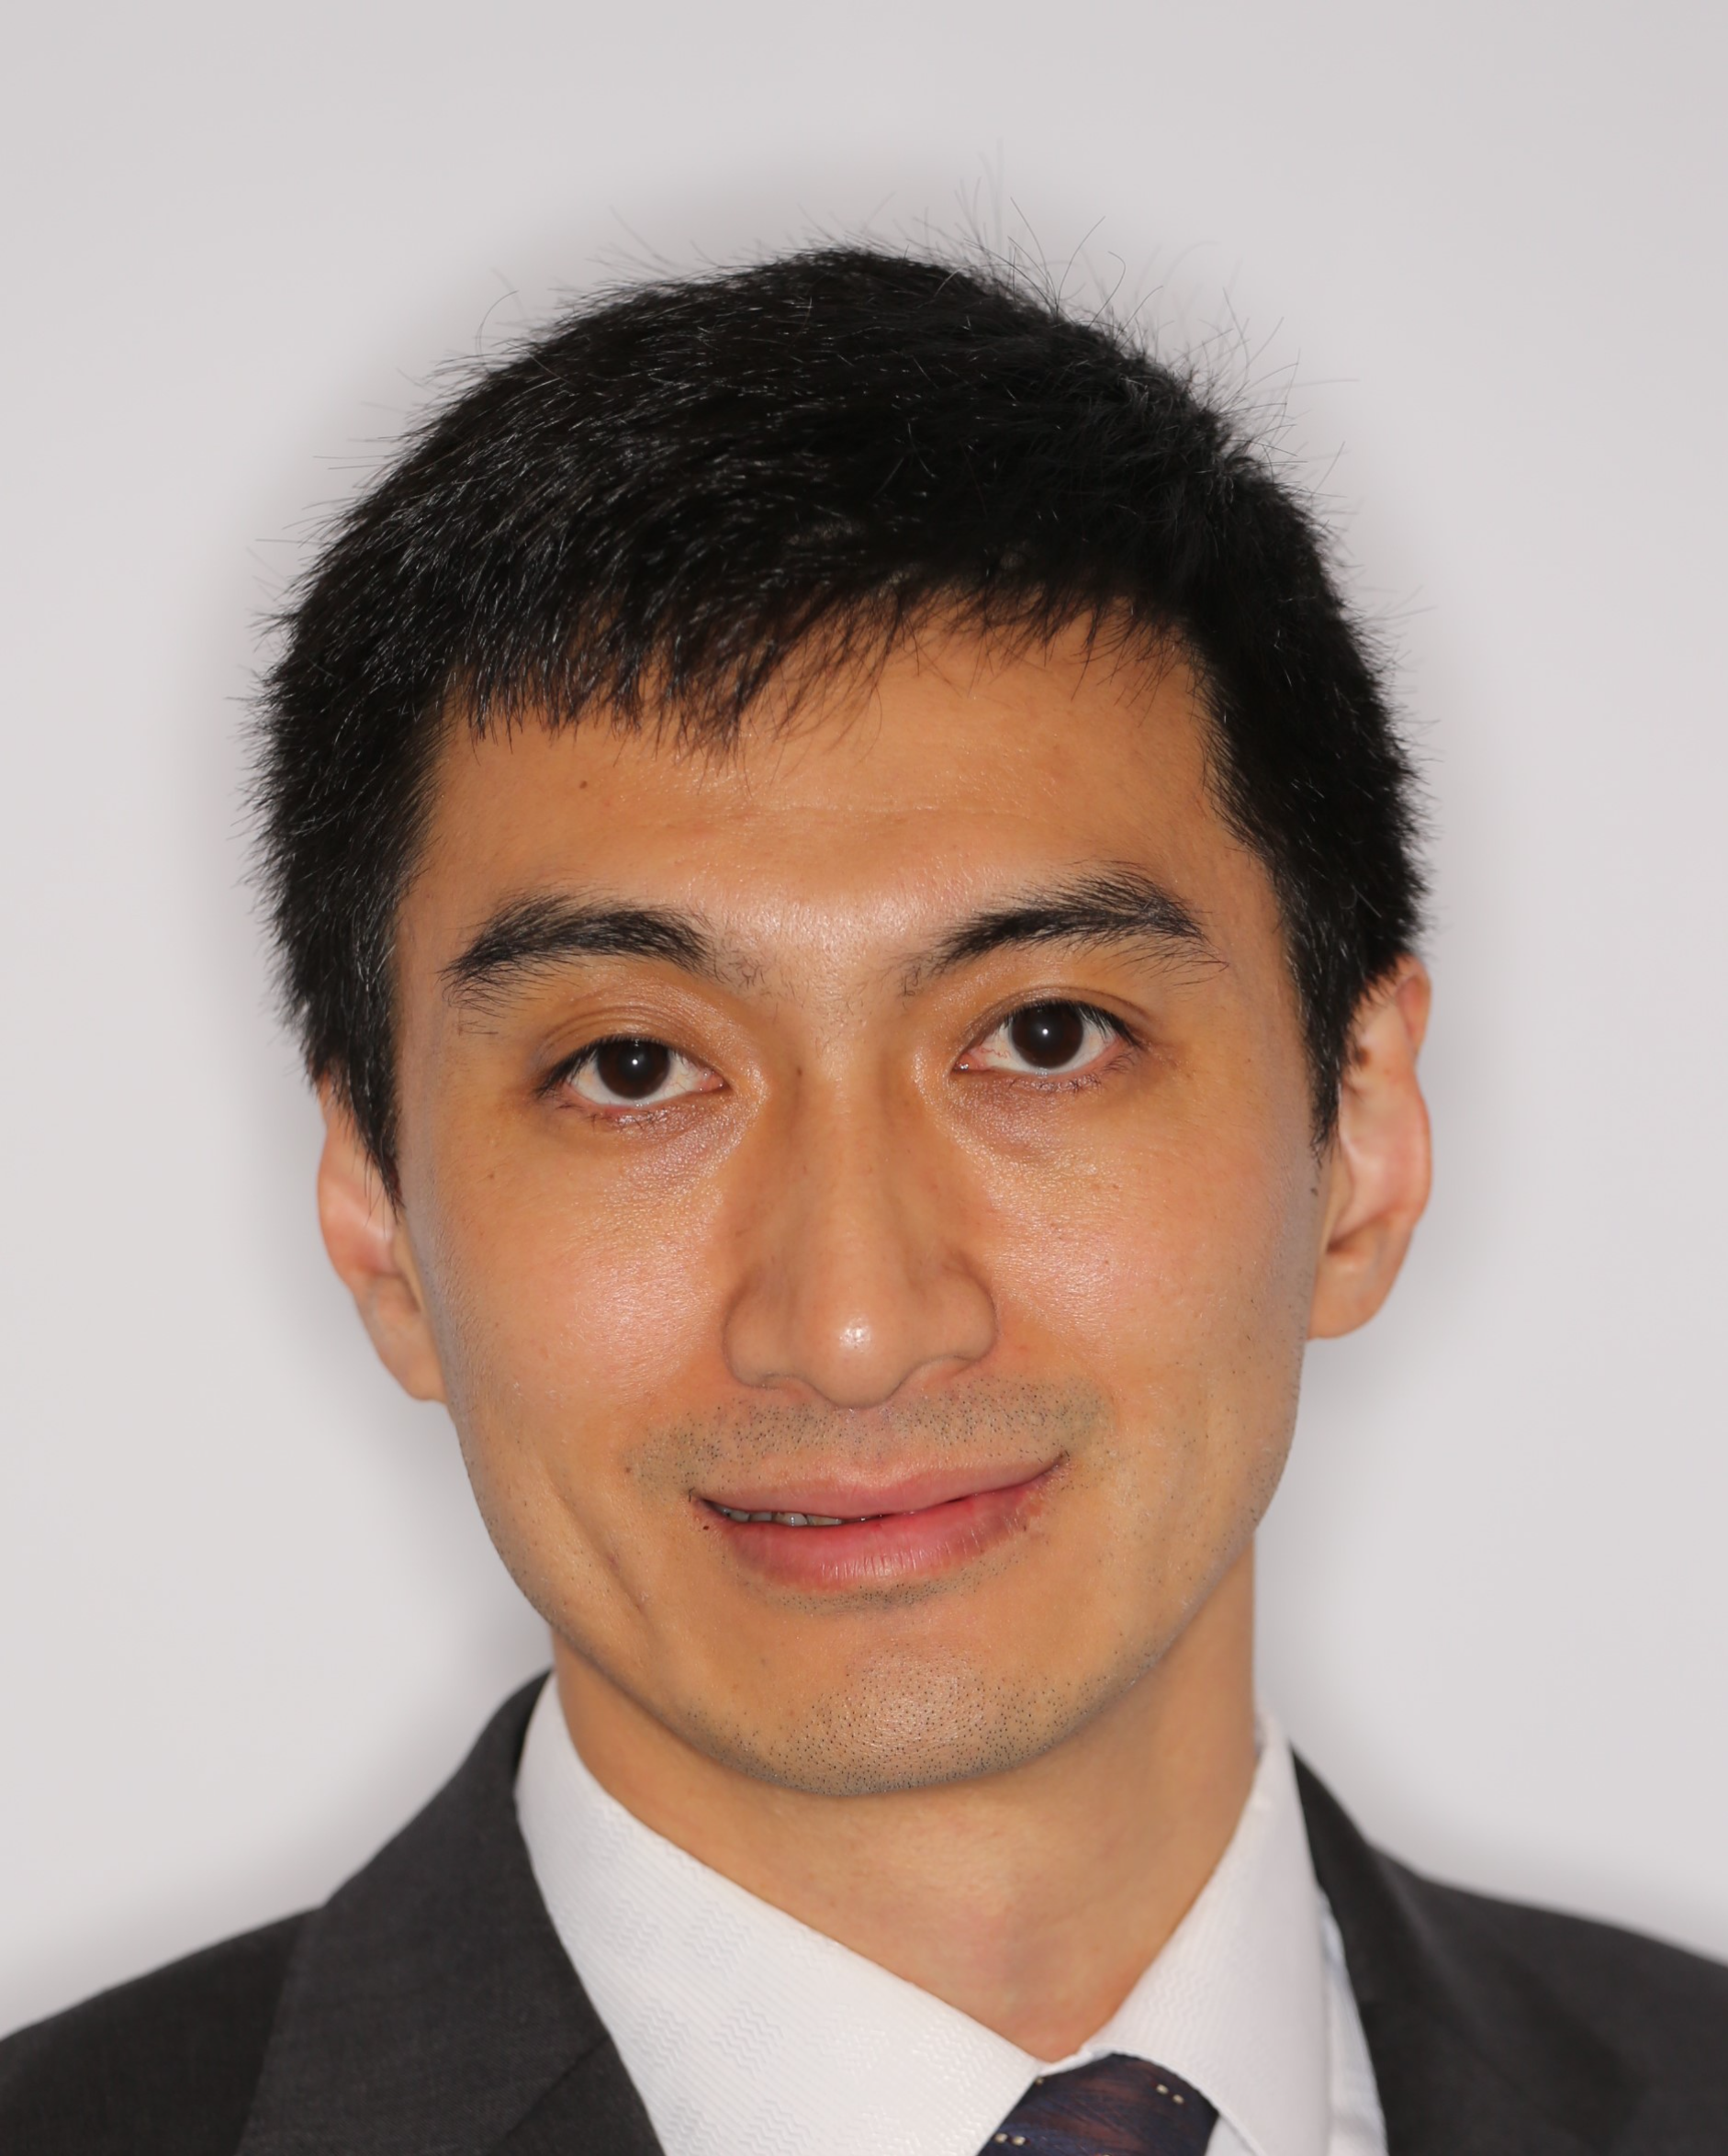 Tao Chen, Petroleum Engineering Specialist at Saudi Aramco